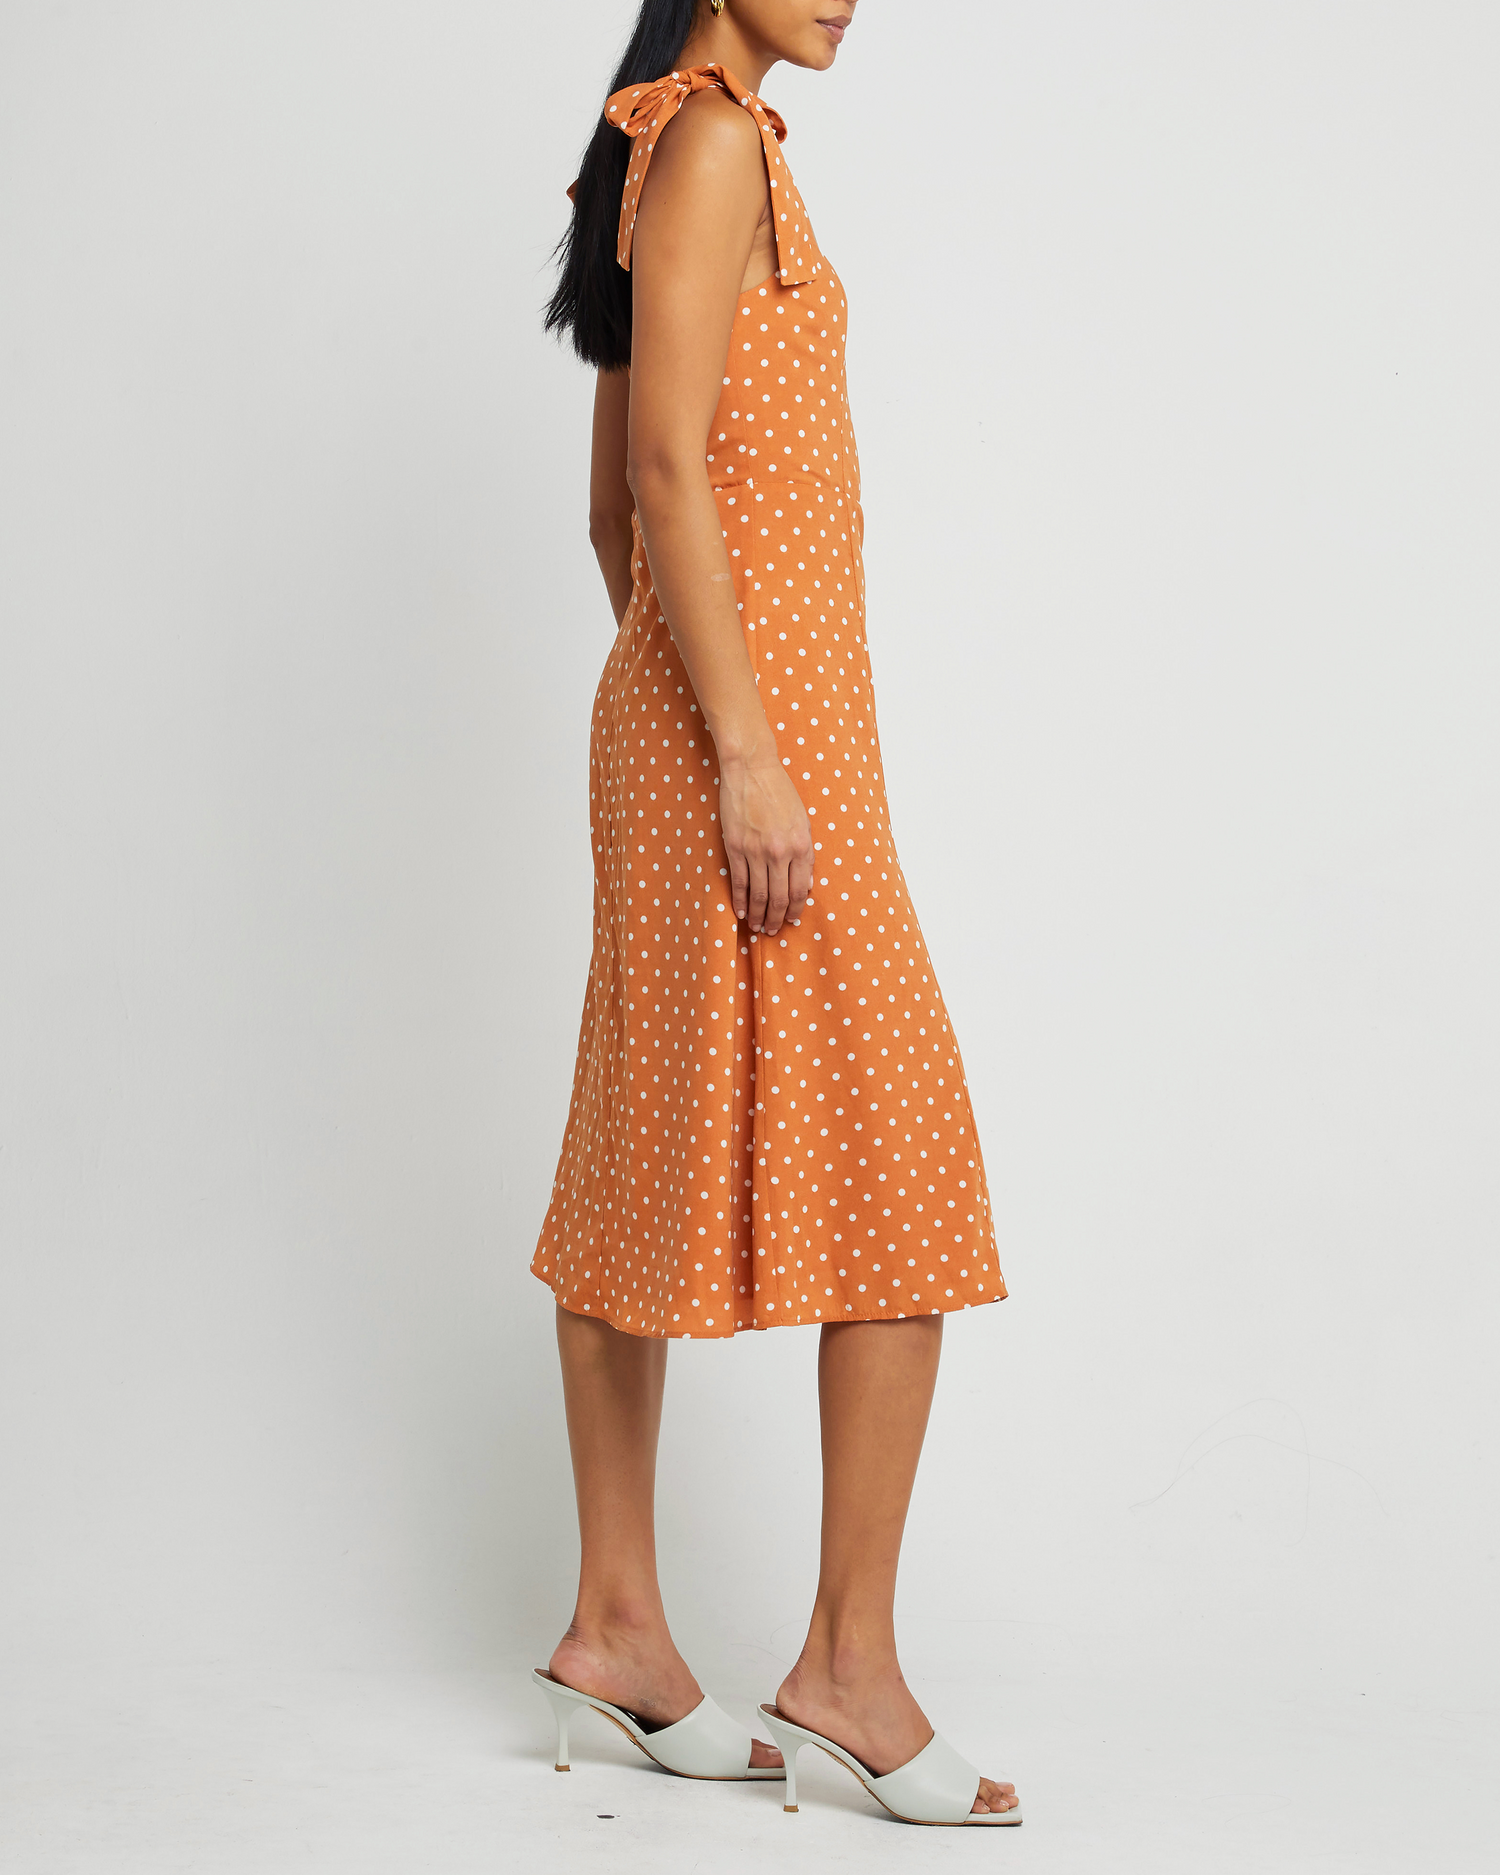 Fifth image of Sasha Dress, a orange midi dress, side slit, tie straps, bow, ribbon, polka dot